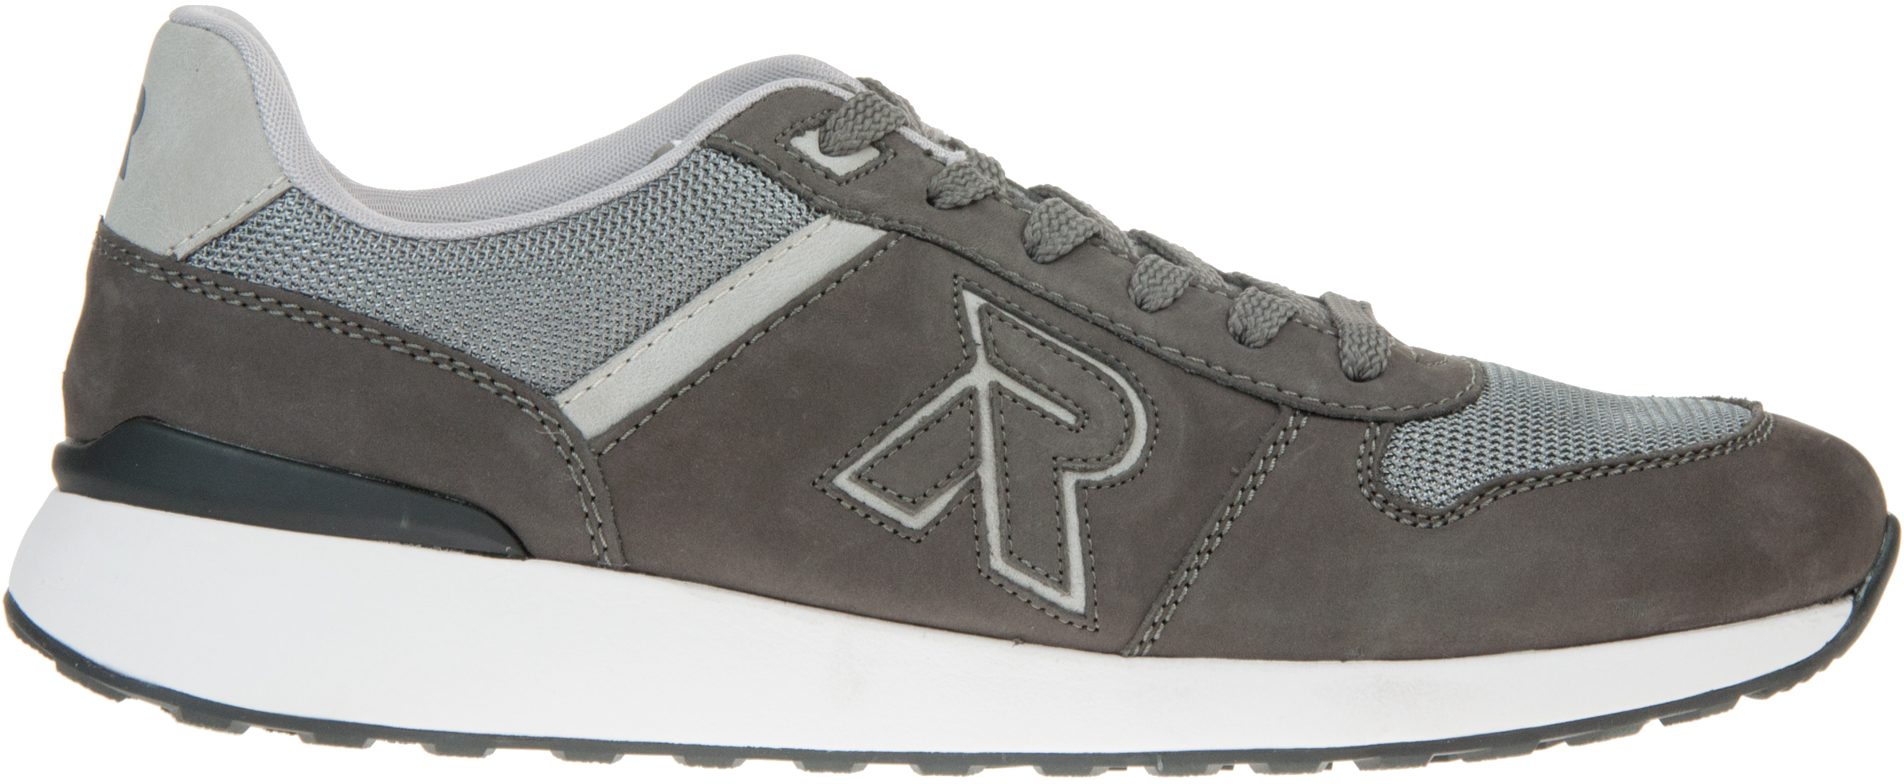 Rieker Flynn Granite 07601-45 - Trainers - Humphries Shoes